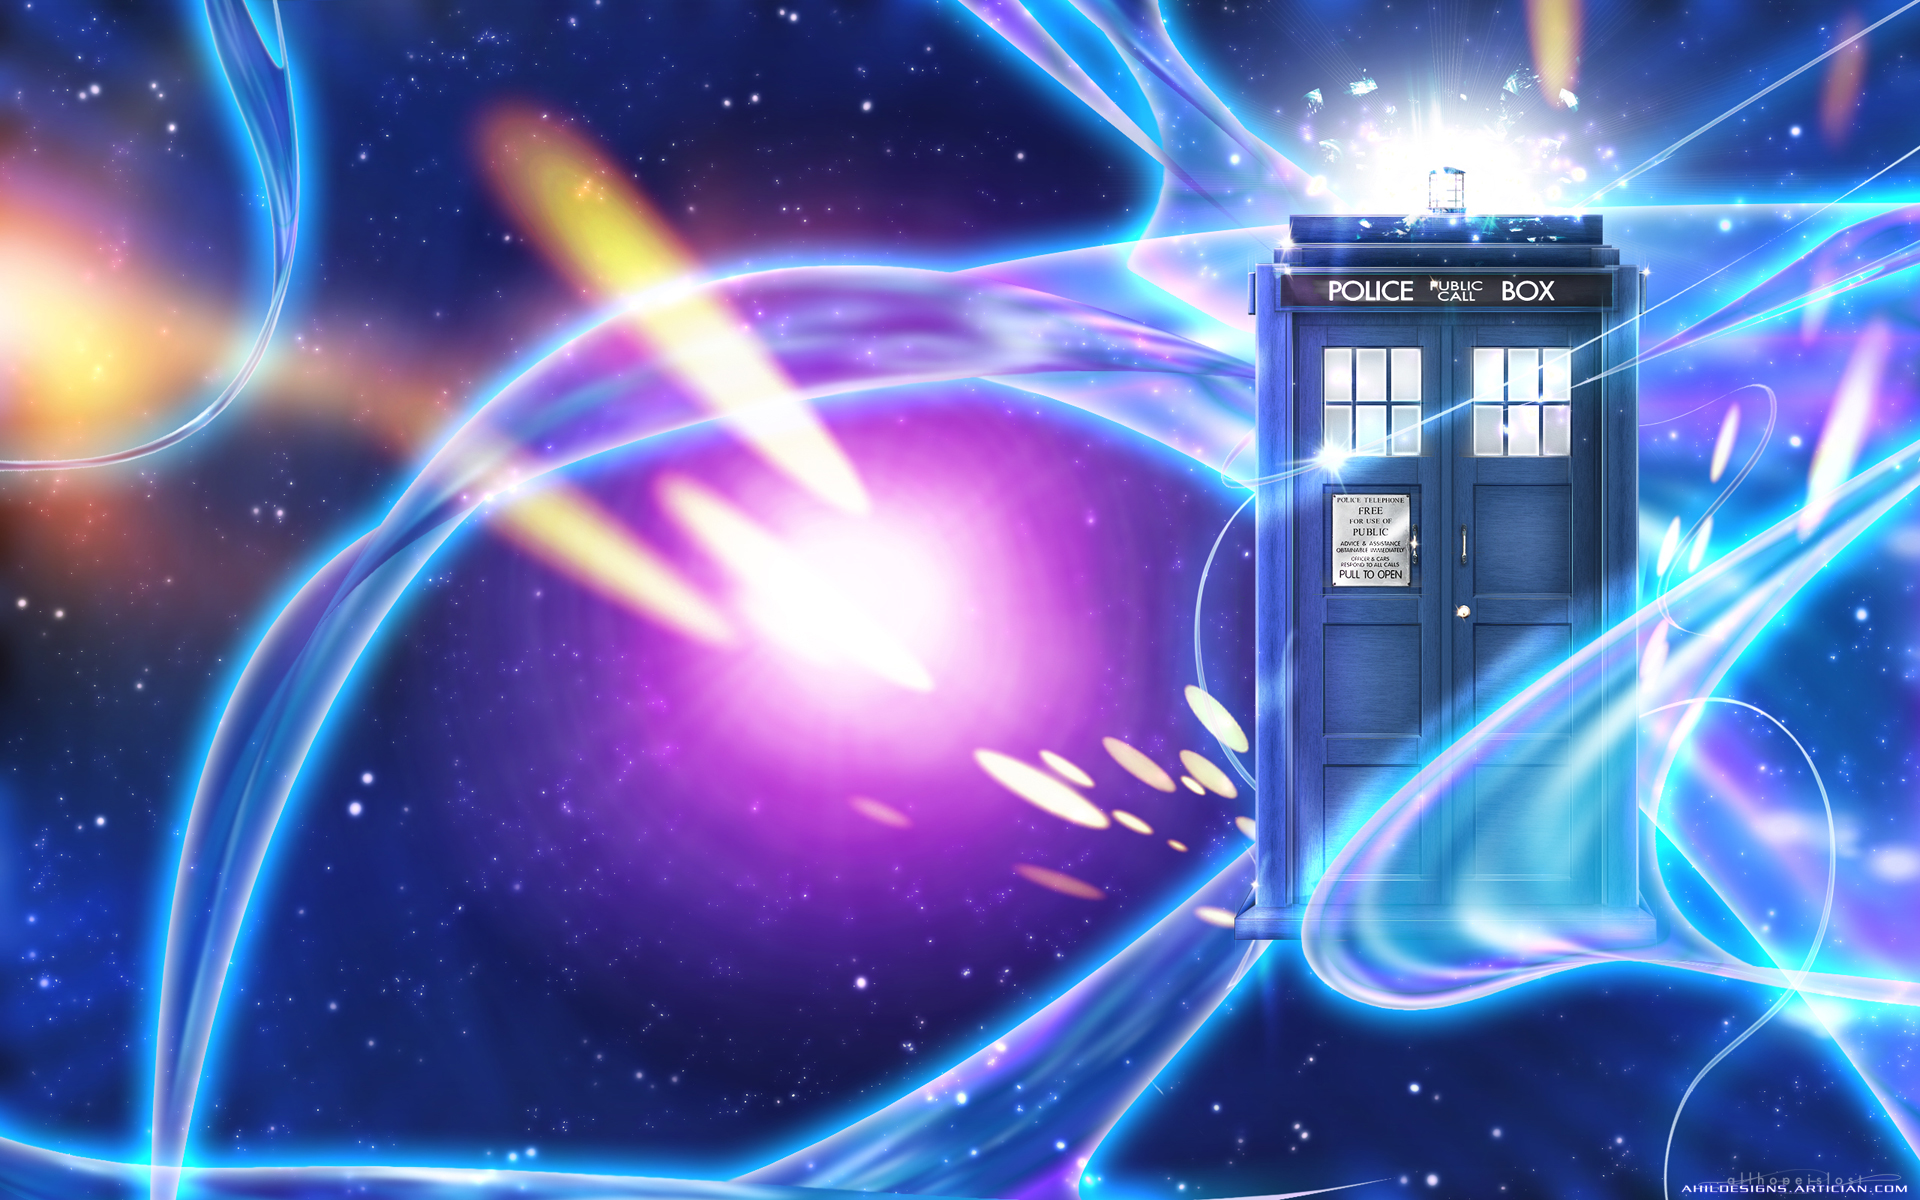 Doctor Who Tardis wallpaper - 610193